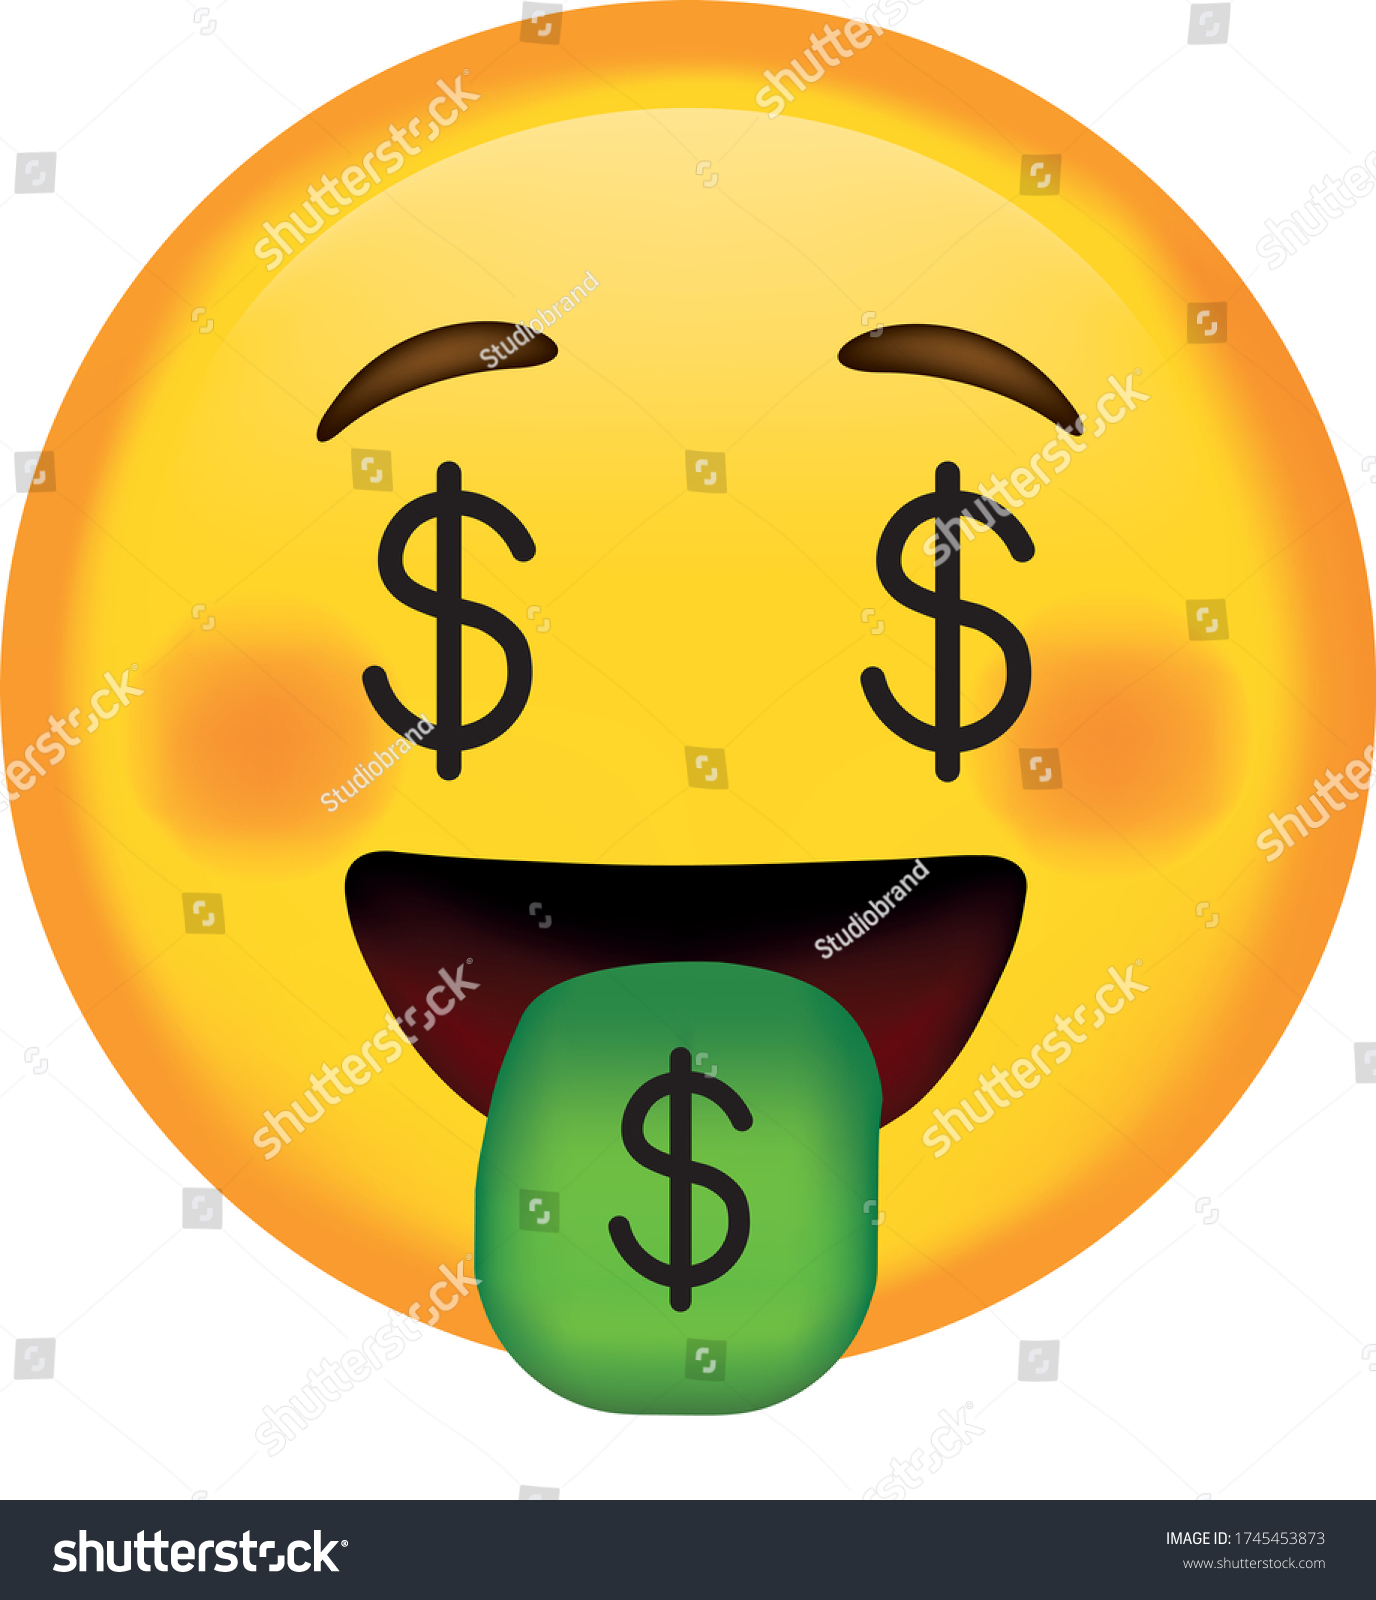 SVG of Vector emoji. Smiling dollar eye face. Smiling face. Smile vector emoji. Happy emoticon. Cute emoticon isolated on white background. Money icon. svg